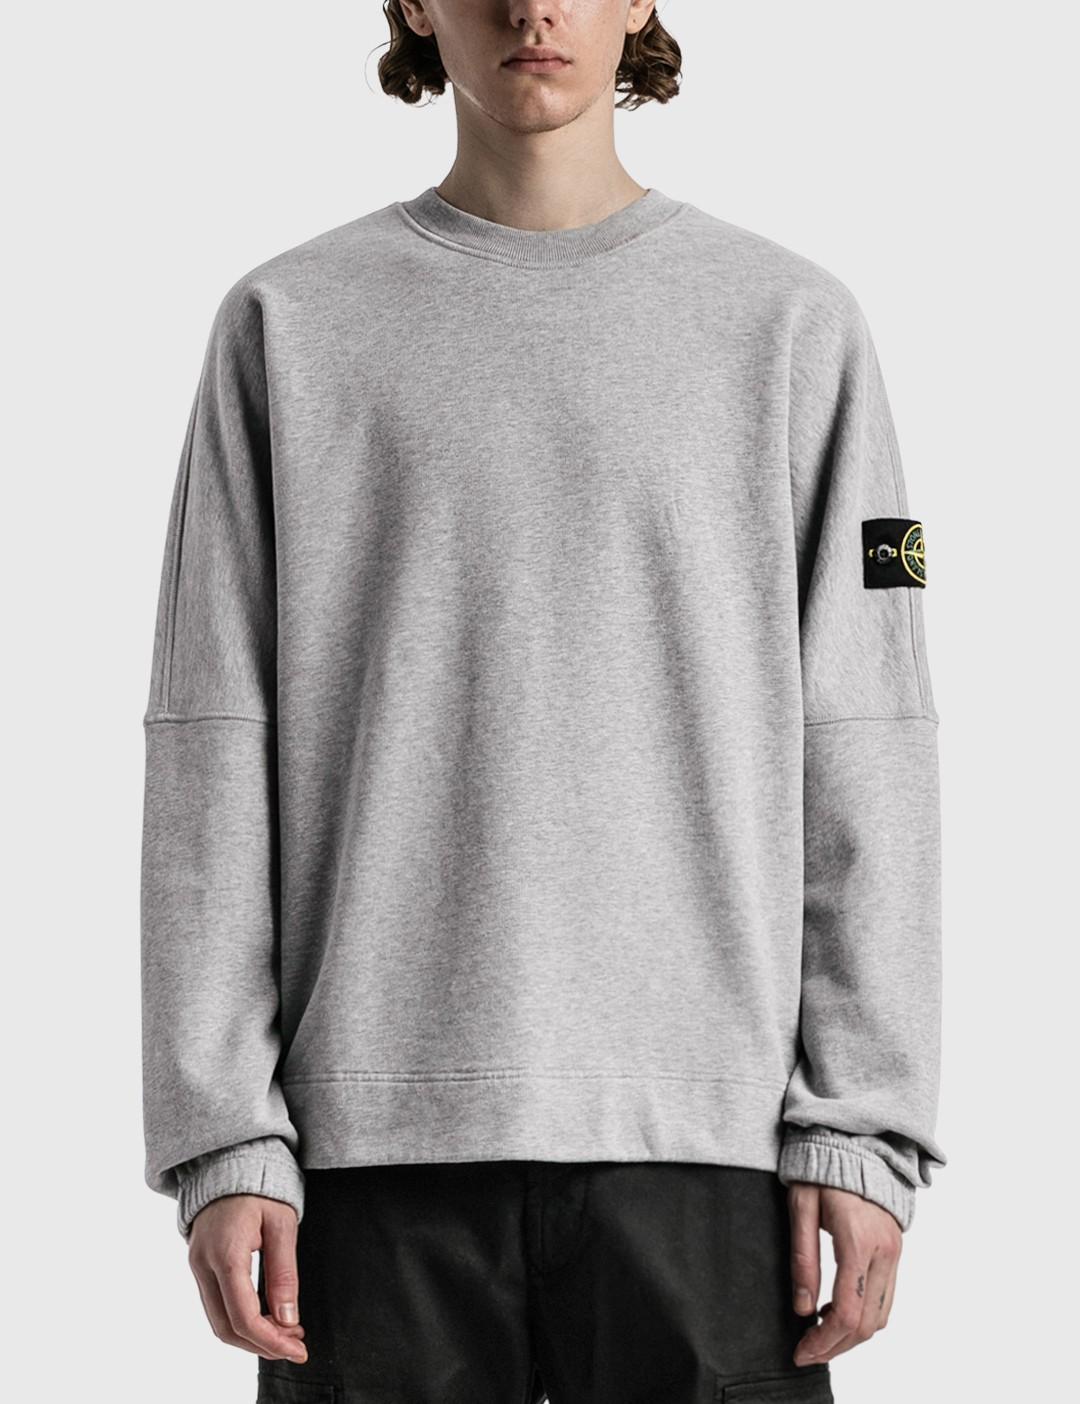 Stone Island Cotton Crewneck Sweatshirt in Gray for Men | Lyst